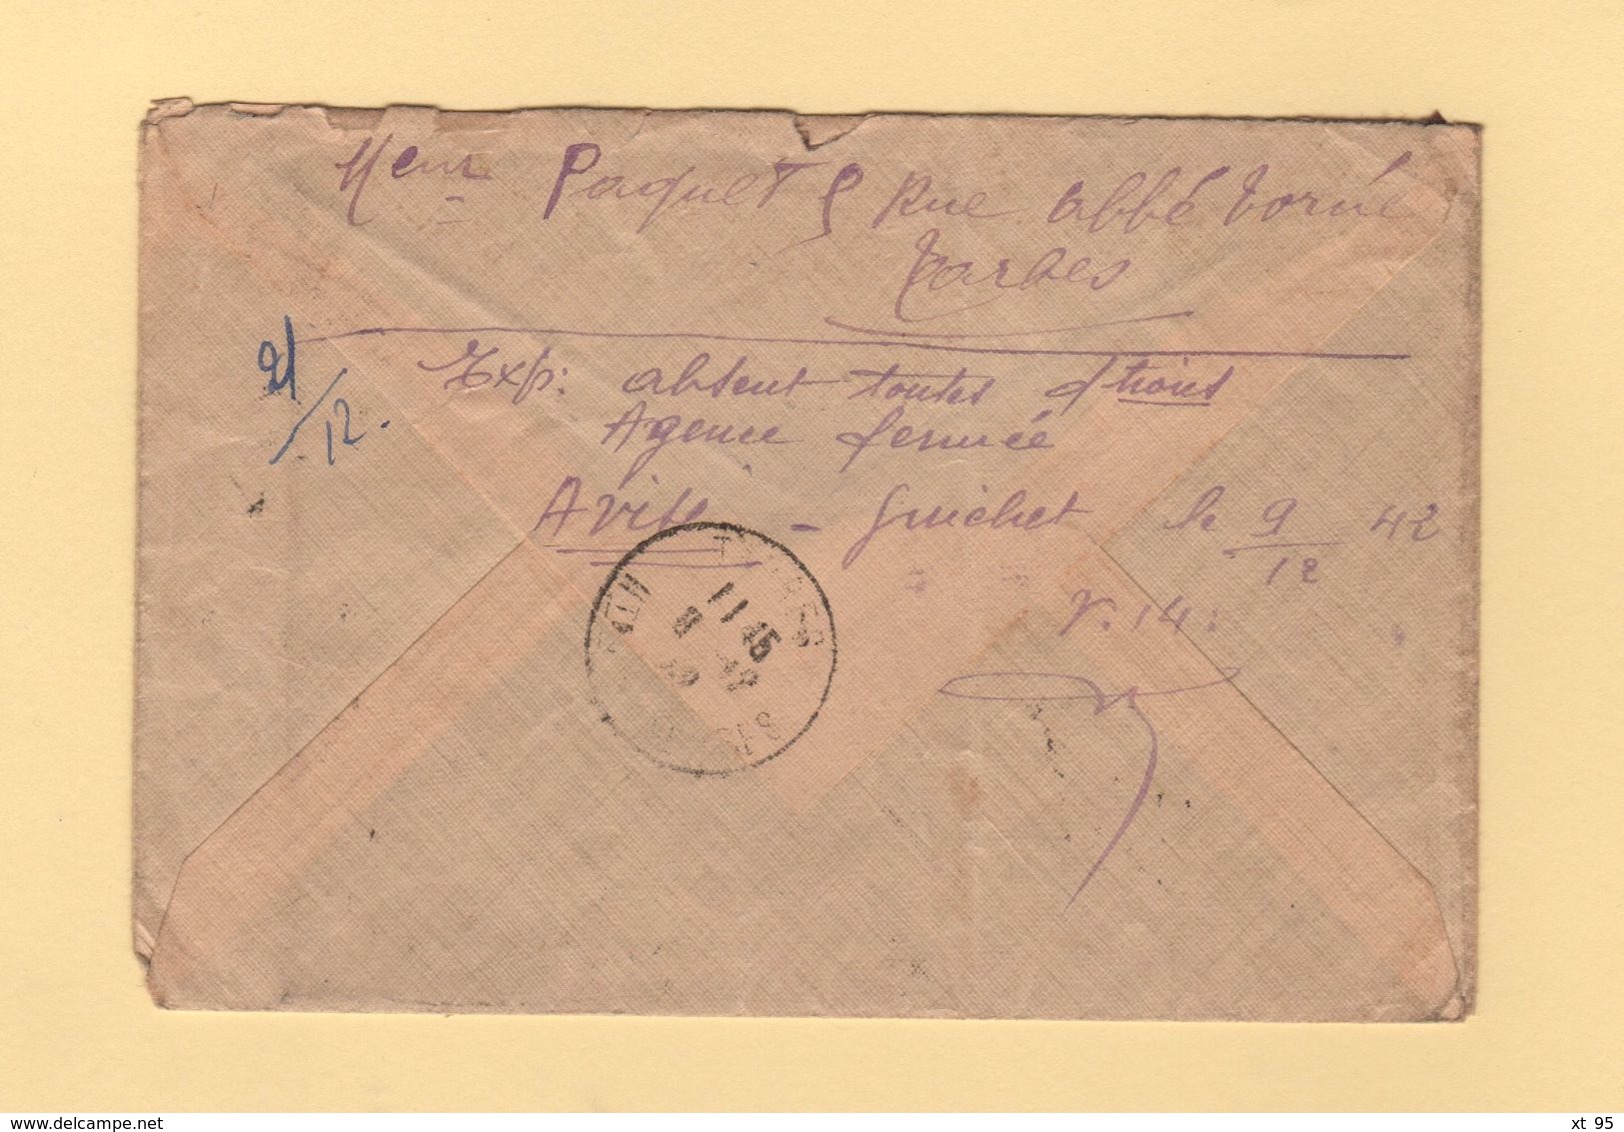 Destination Tunis - Tarbes - Recommandes - Relations Postale Suspendues - 1942 - Oorlog 1939-45